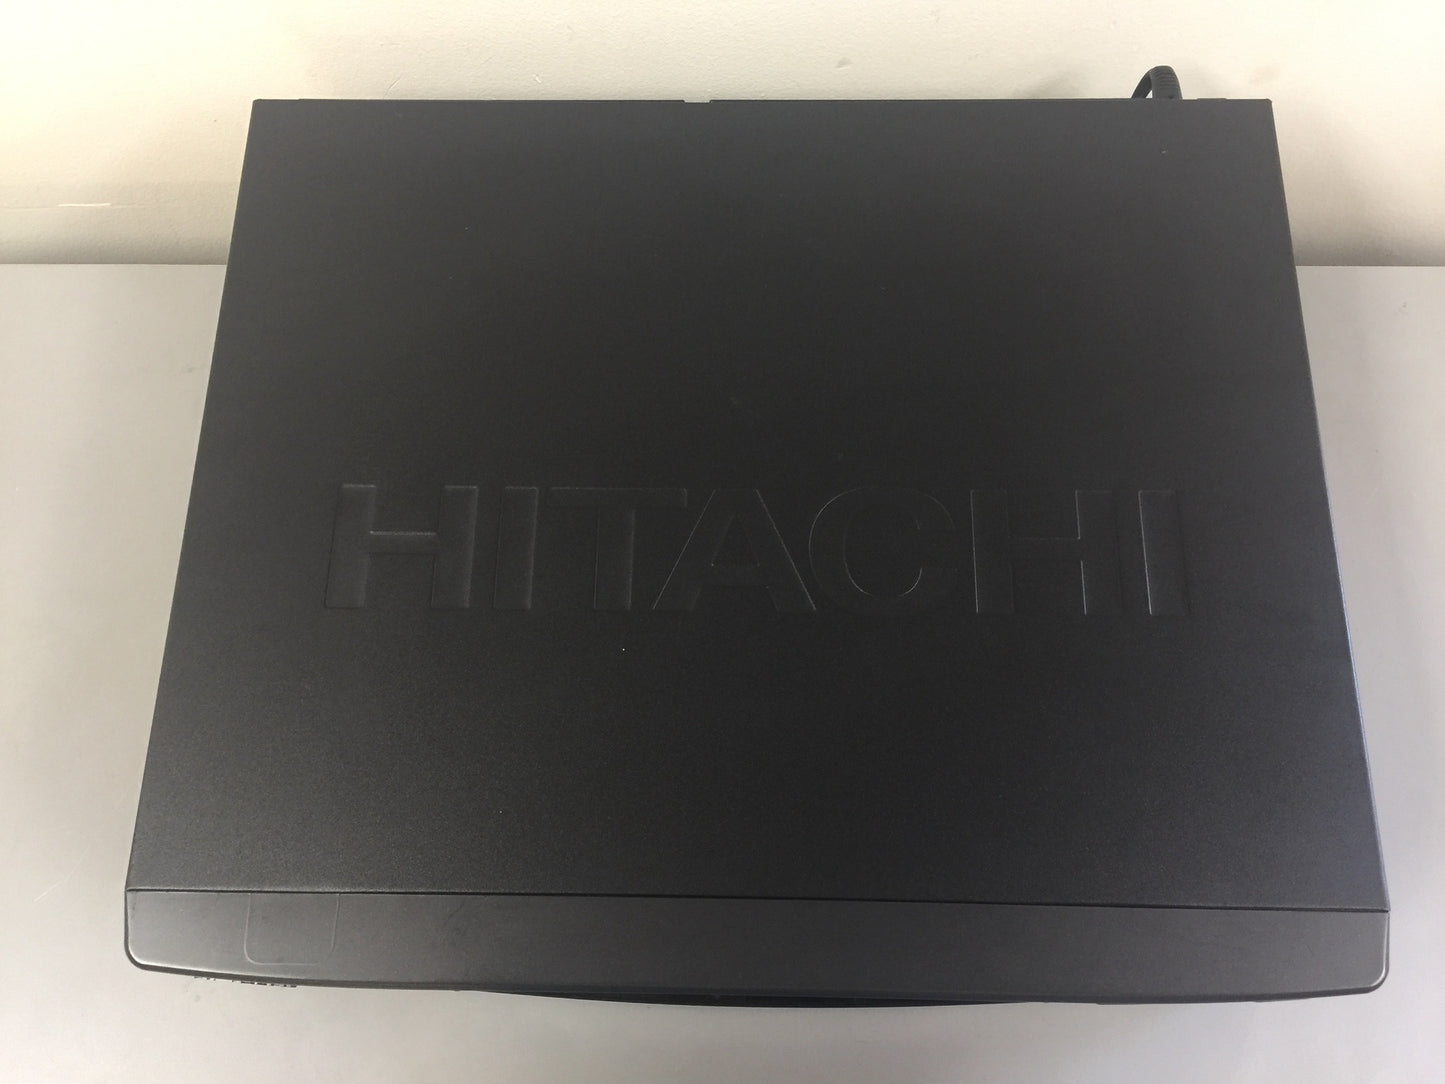 Hitachi F391 Hi-Fi Stereo Video Cassette Recorder